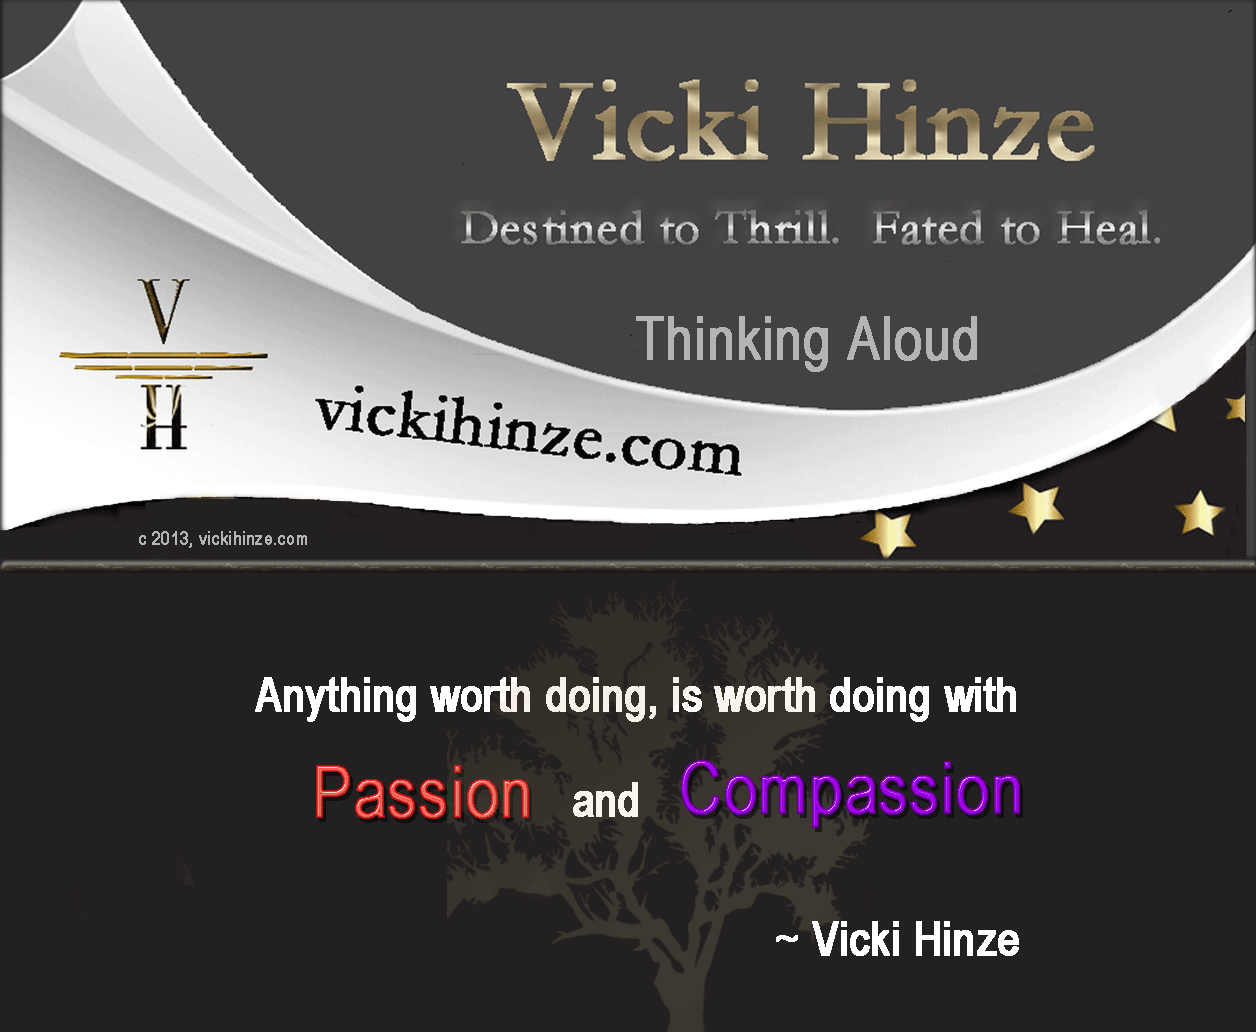 Thinking Aloud, Vicki Hinze, Passion, Compassion